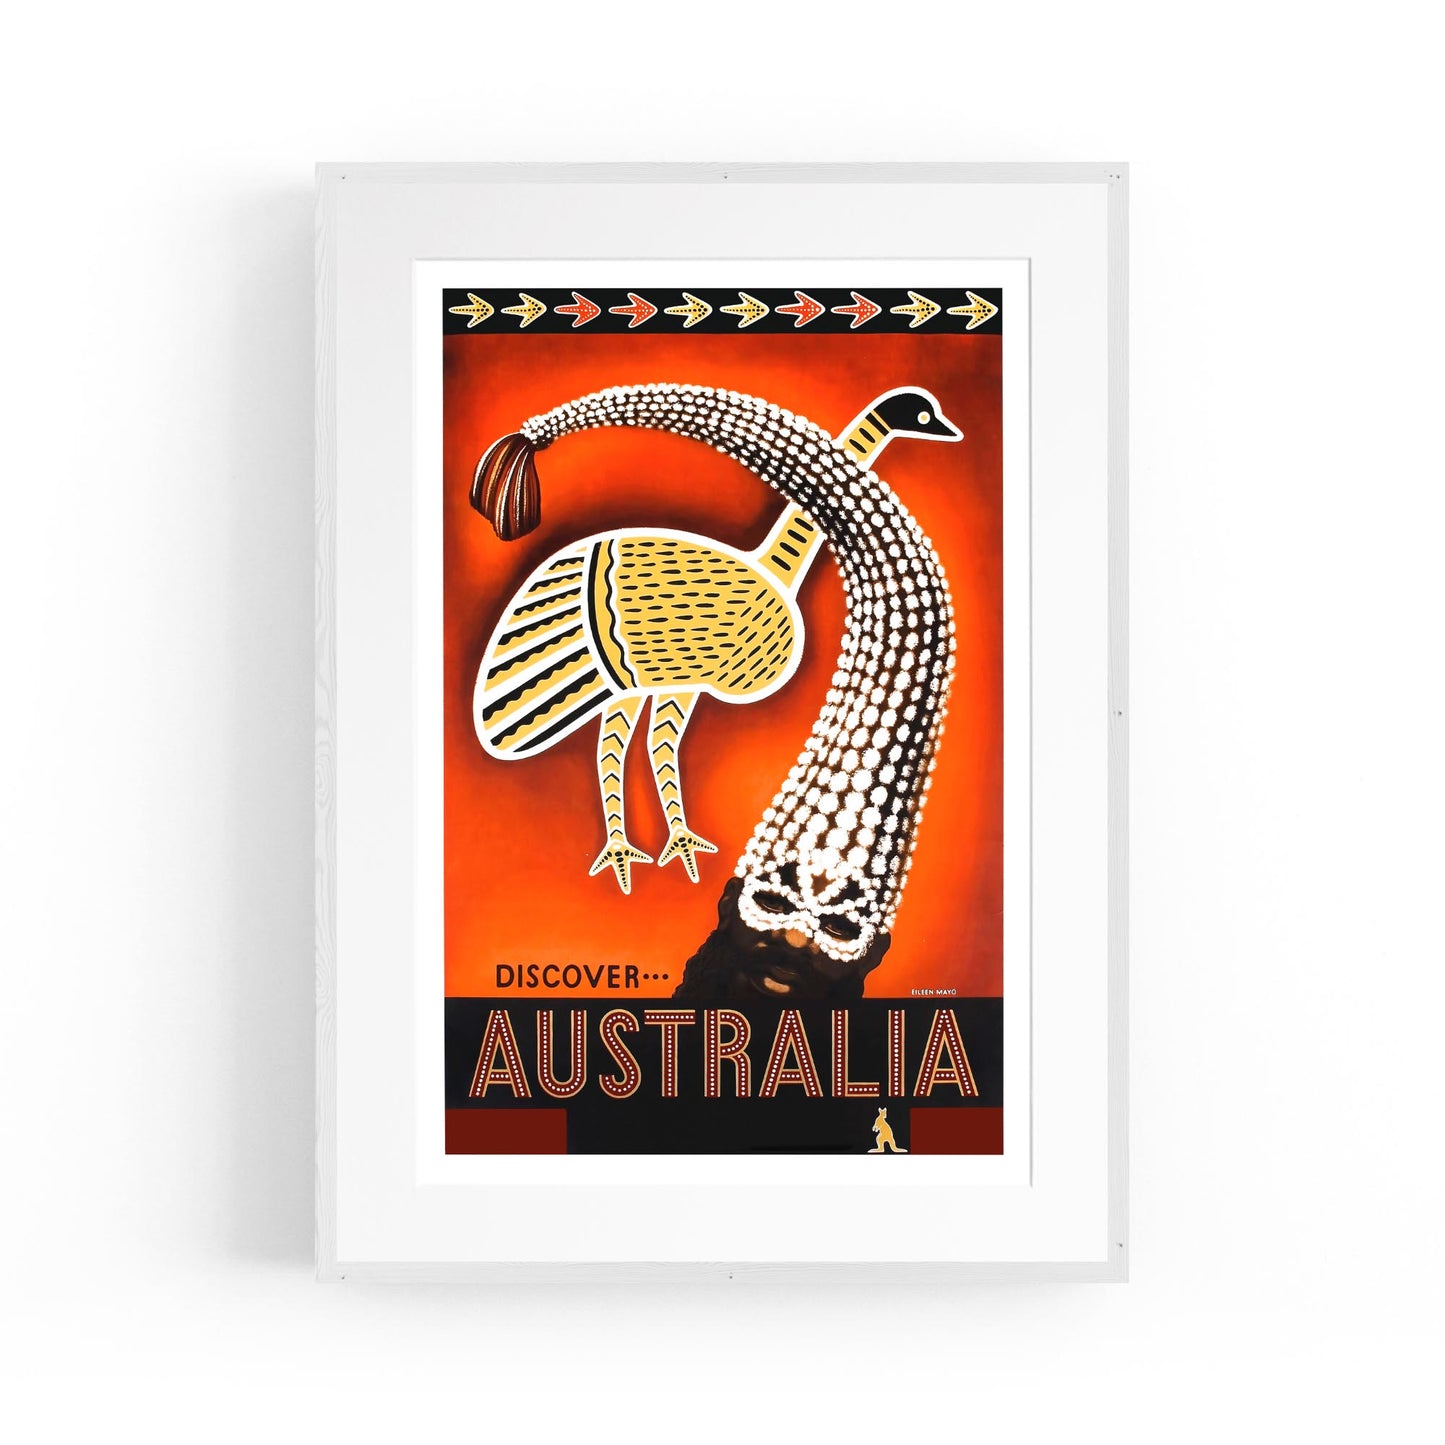 Discover Australia Indigenous Australia | Framed Vintage Travel Poster